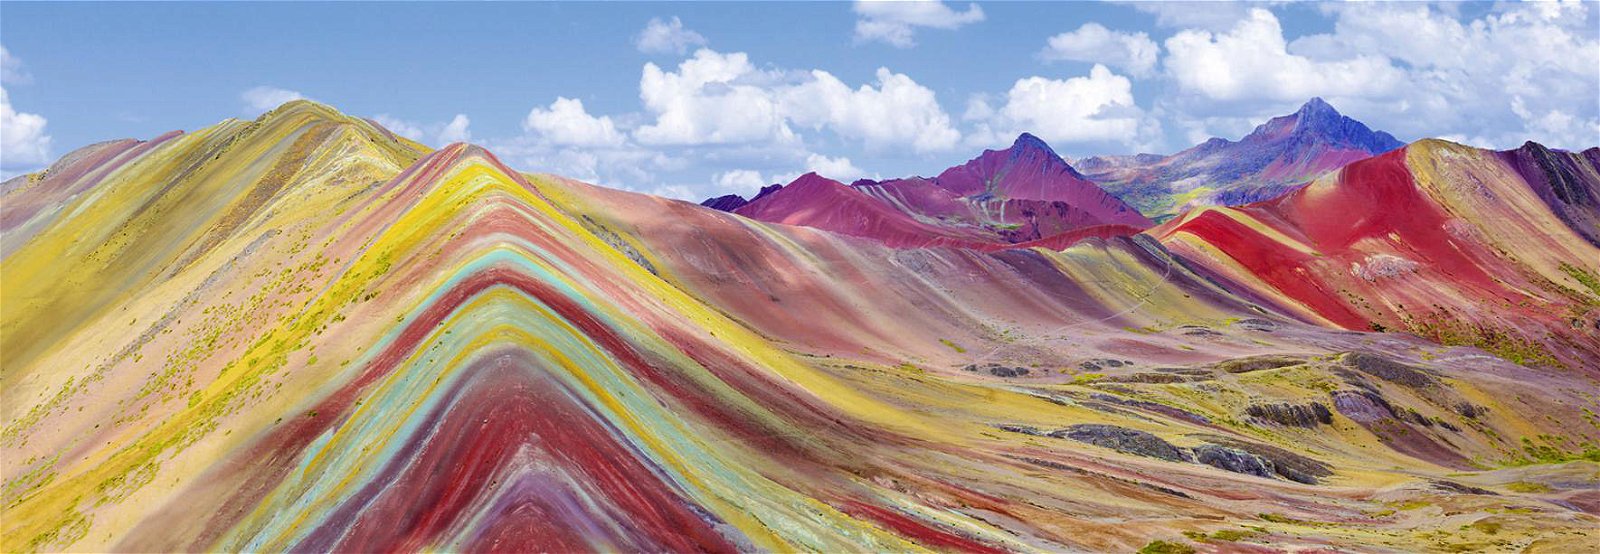 Cuadro canvas vibicunca rainbow mountain peru